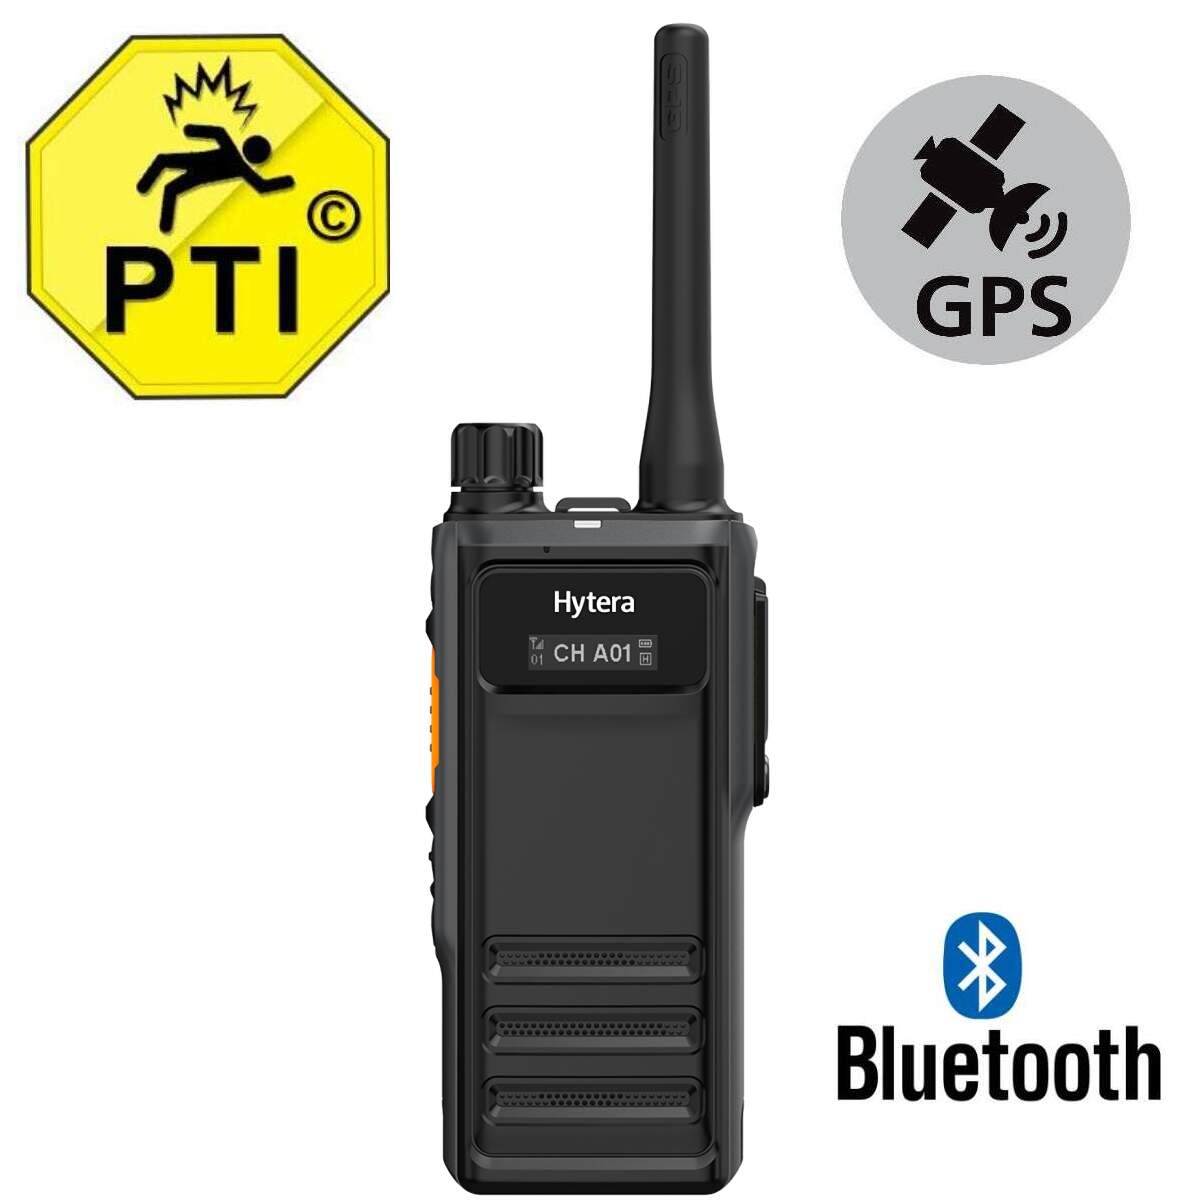 Hytera HP605 UHF - PTI Bluetooth GPS image